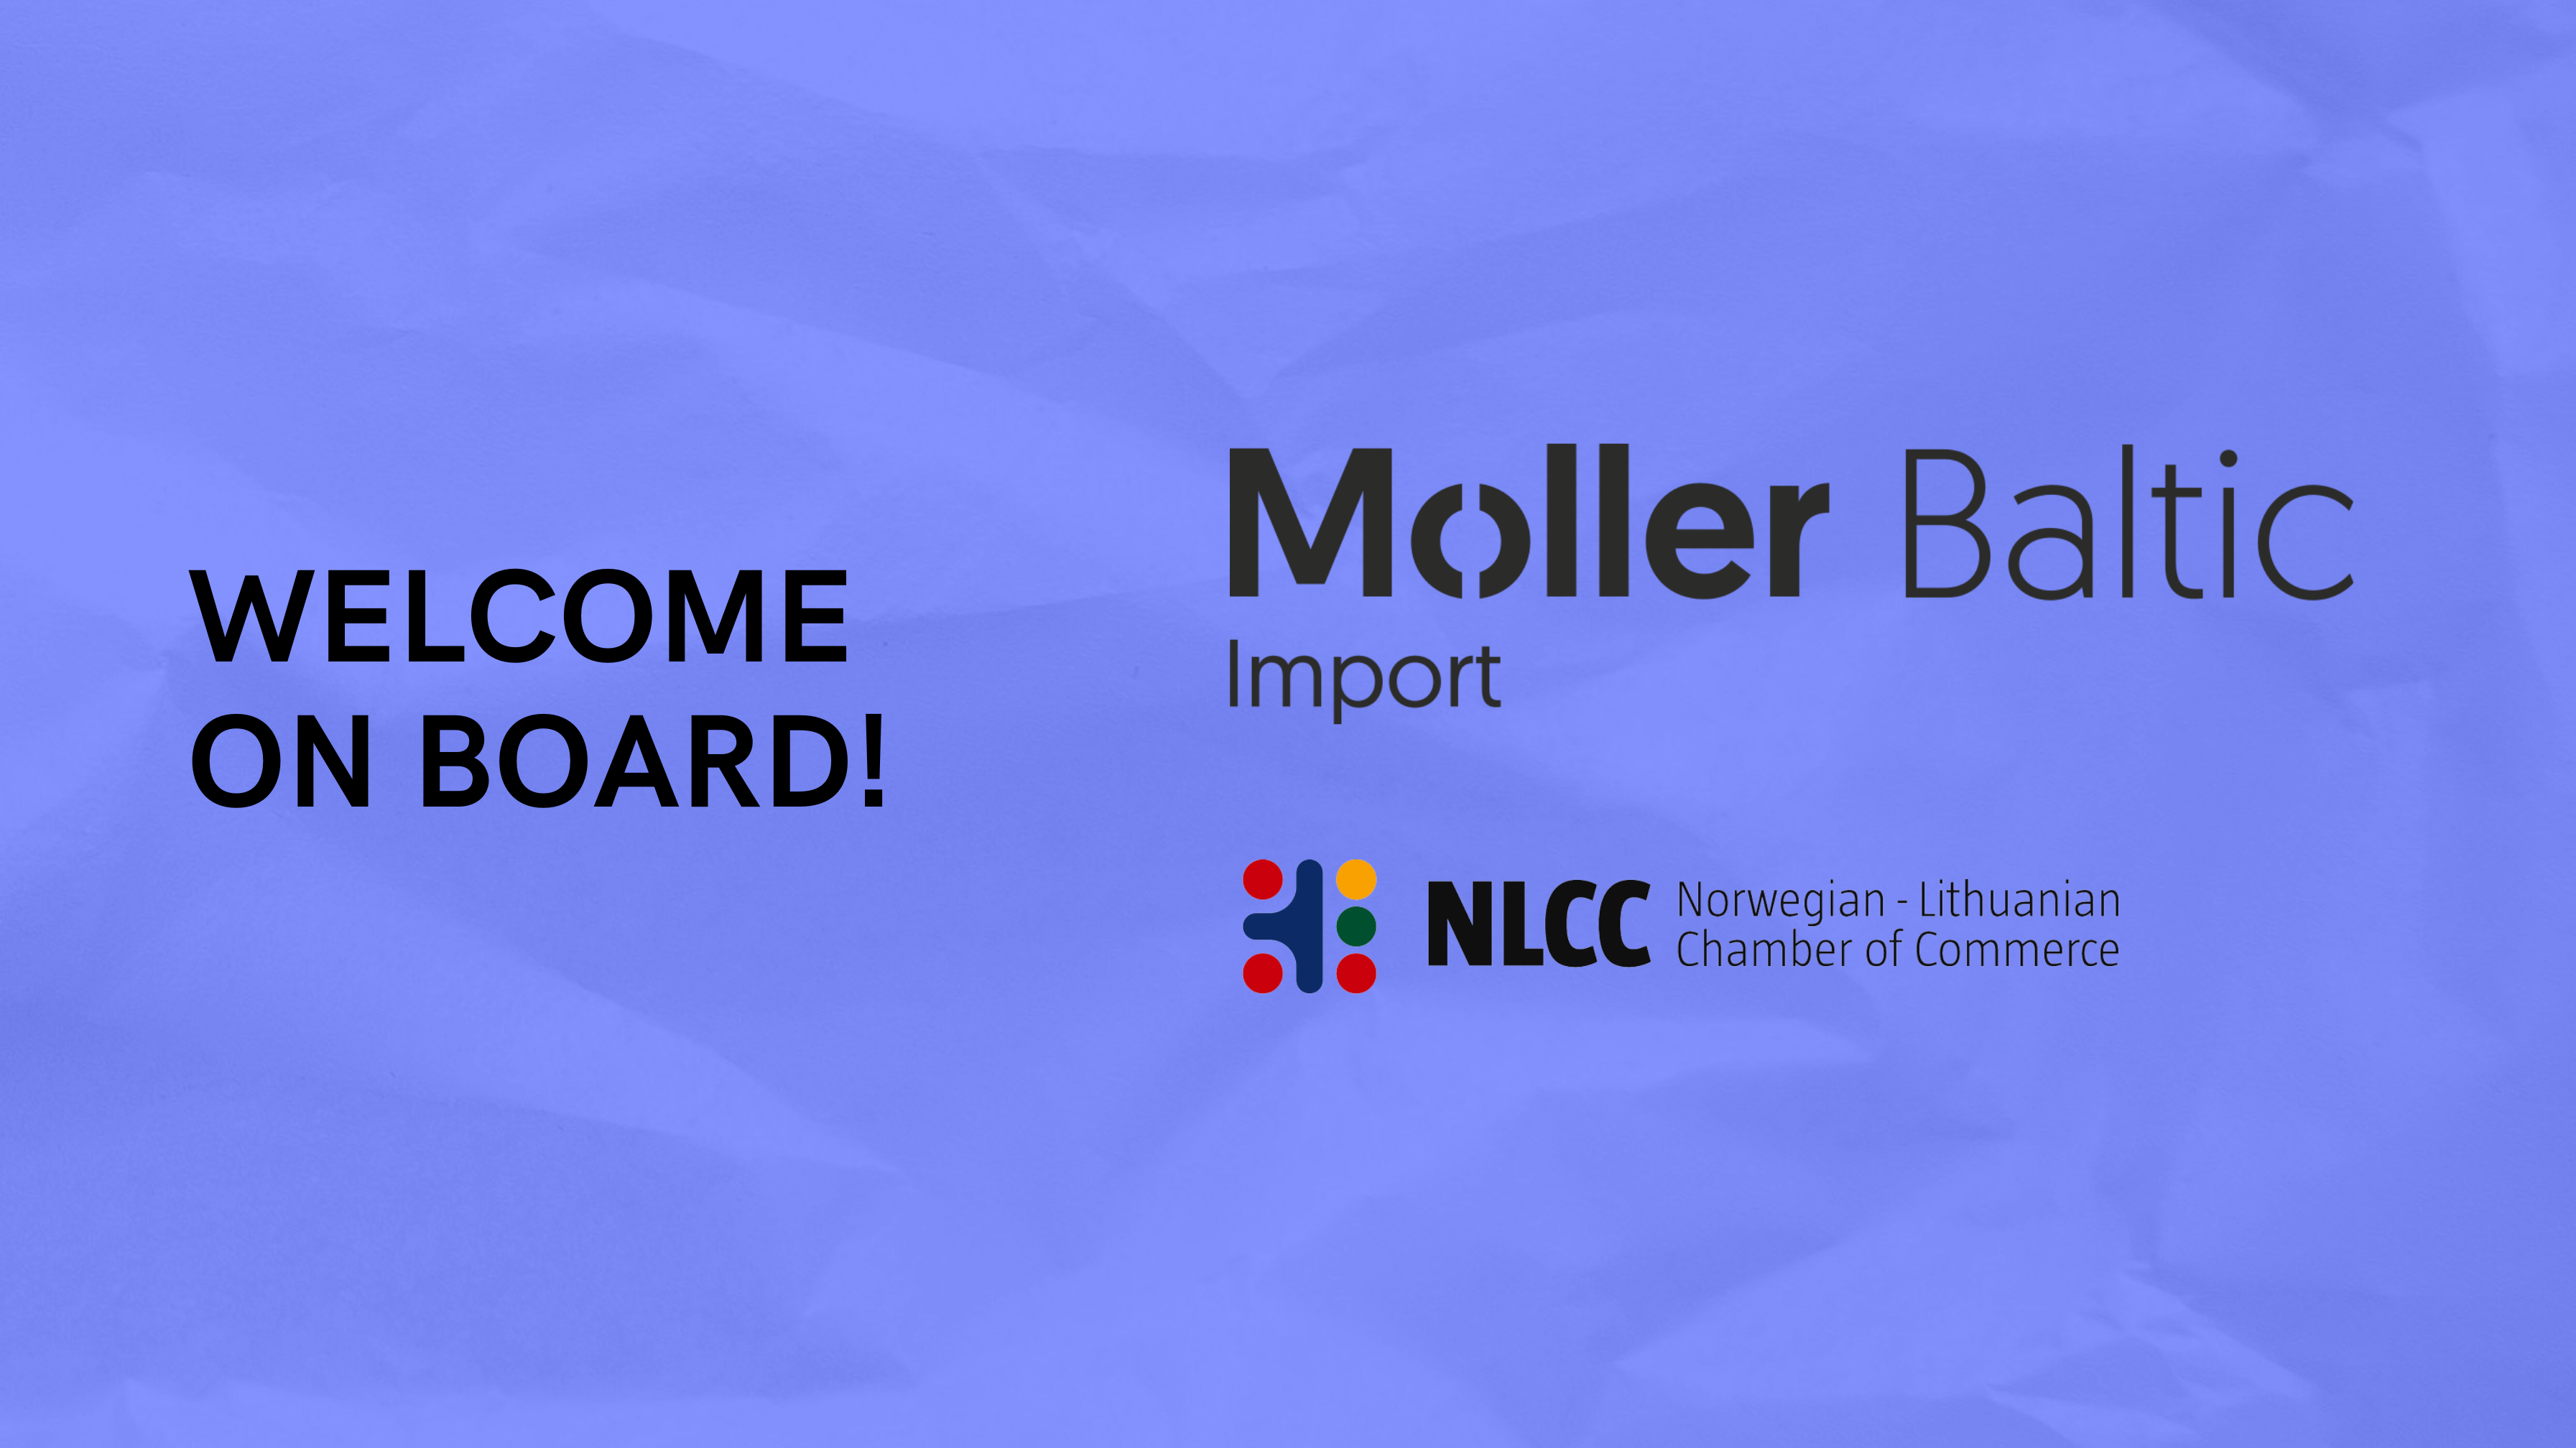 Welcome on board: Møller Baltic Import